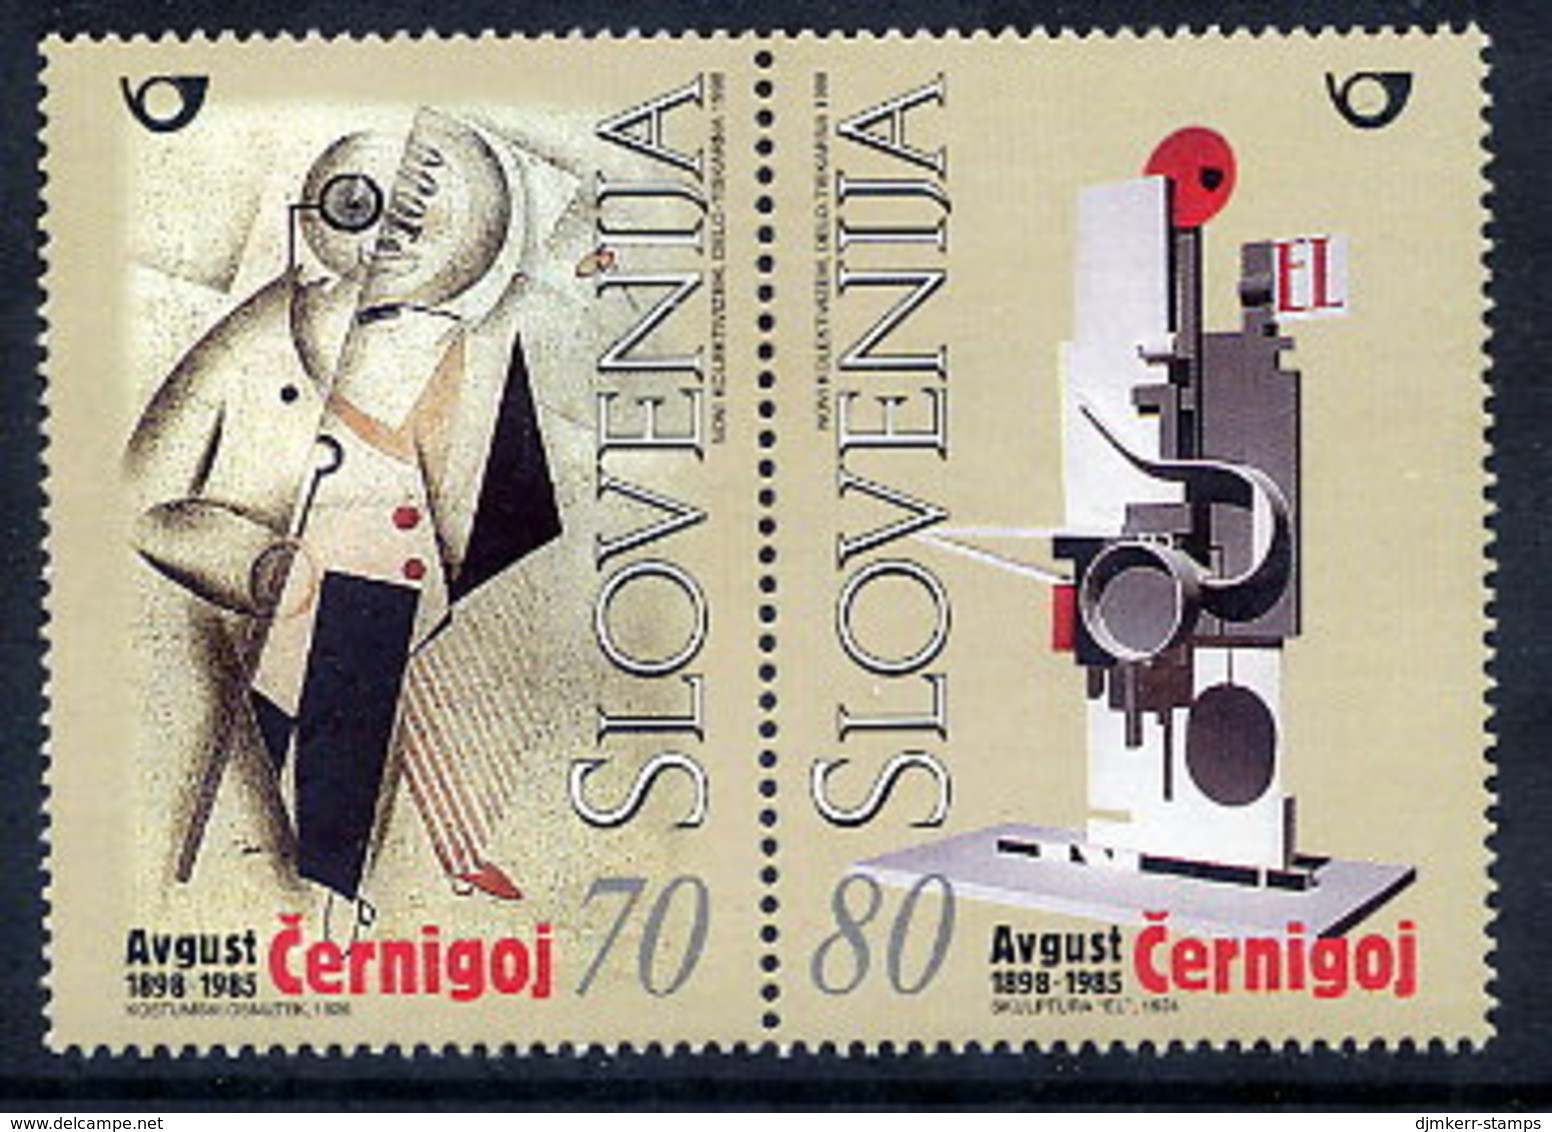 SLOVENIA 1998 August Cernigoj Centenary  MNH / **  Michel 237-38 - Slowenien